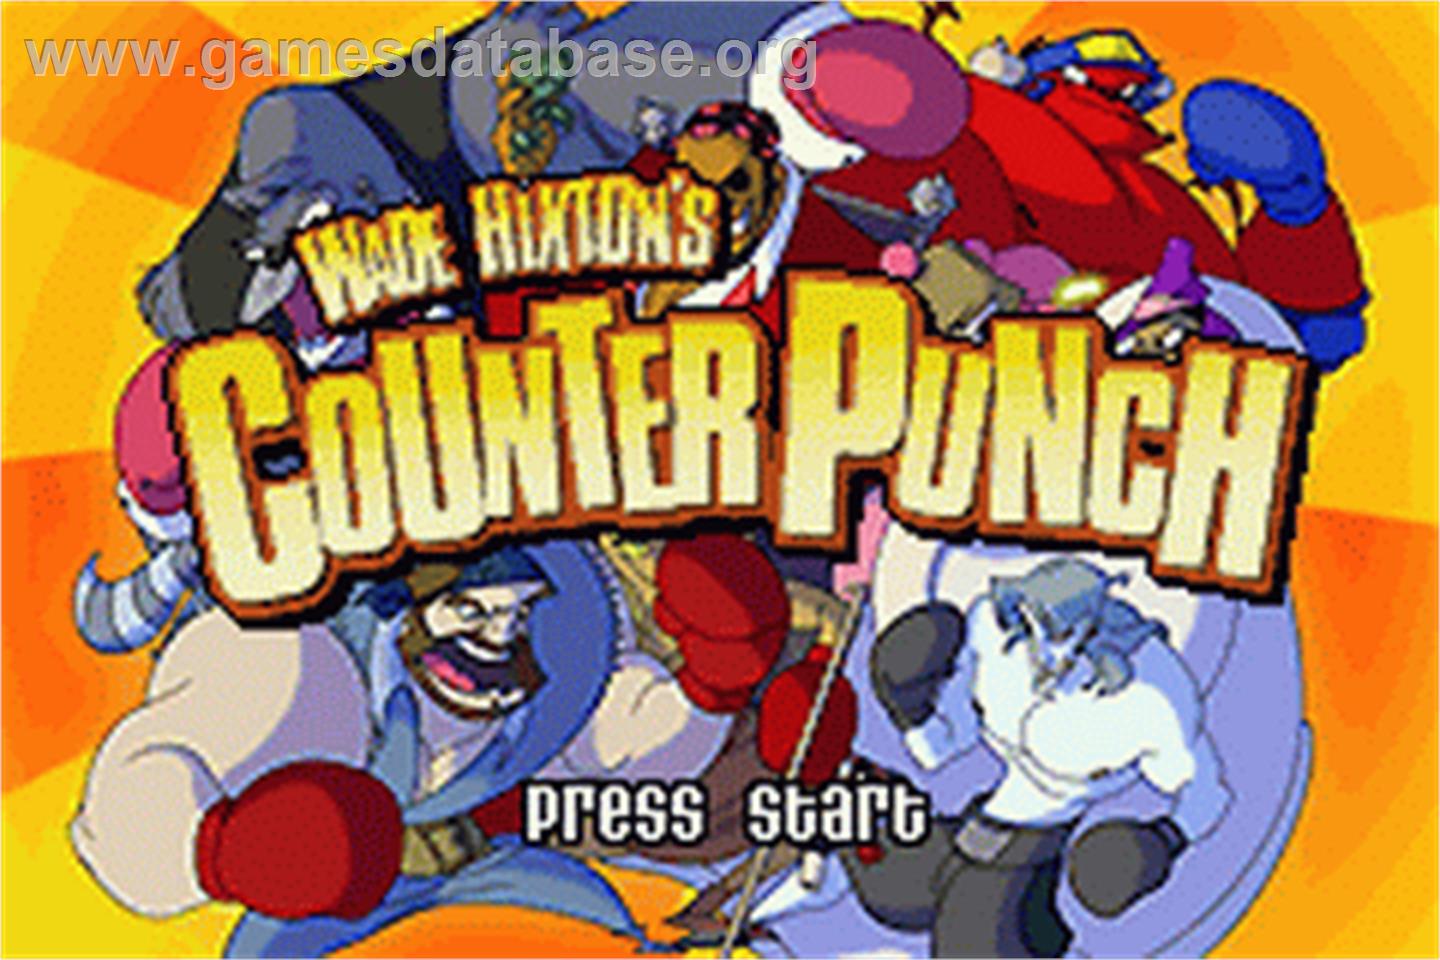 Wade Hixton's Counter Punch - Nintendo Game Boy Advance - Artwork - Title Screen